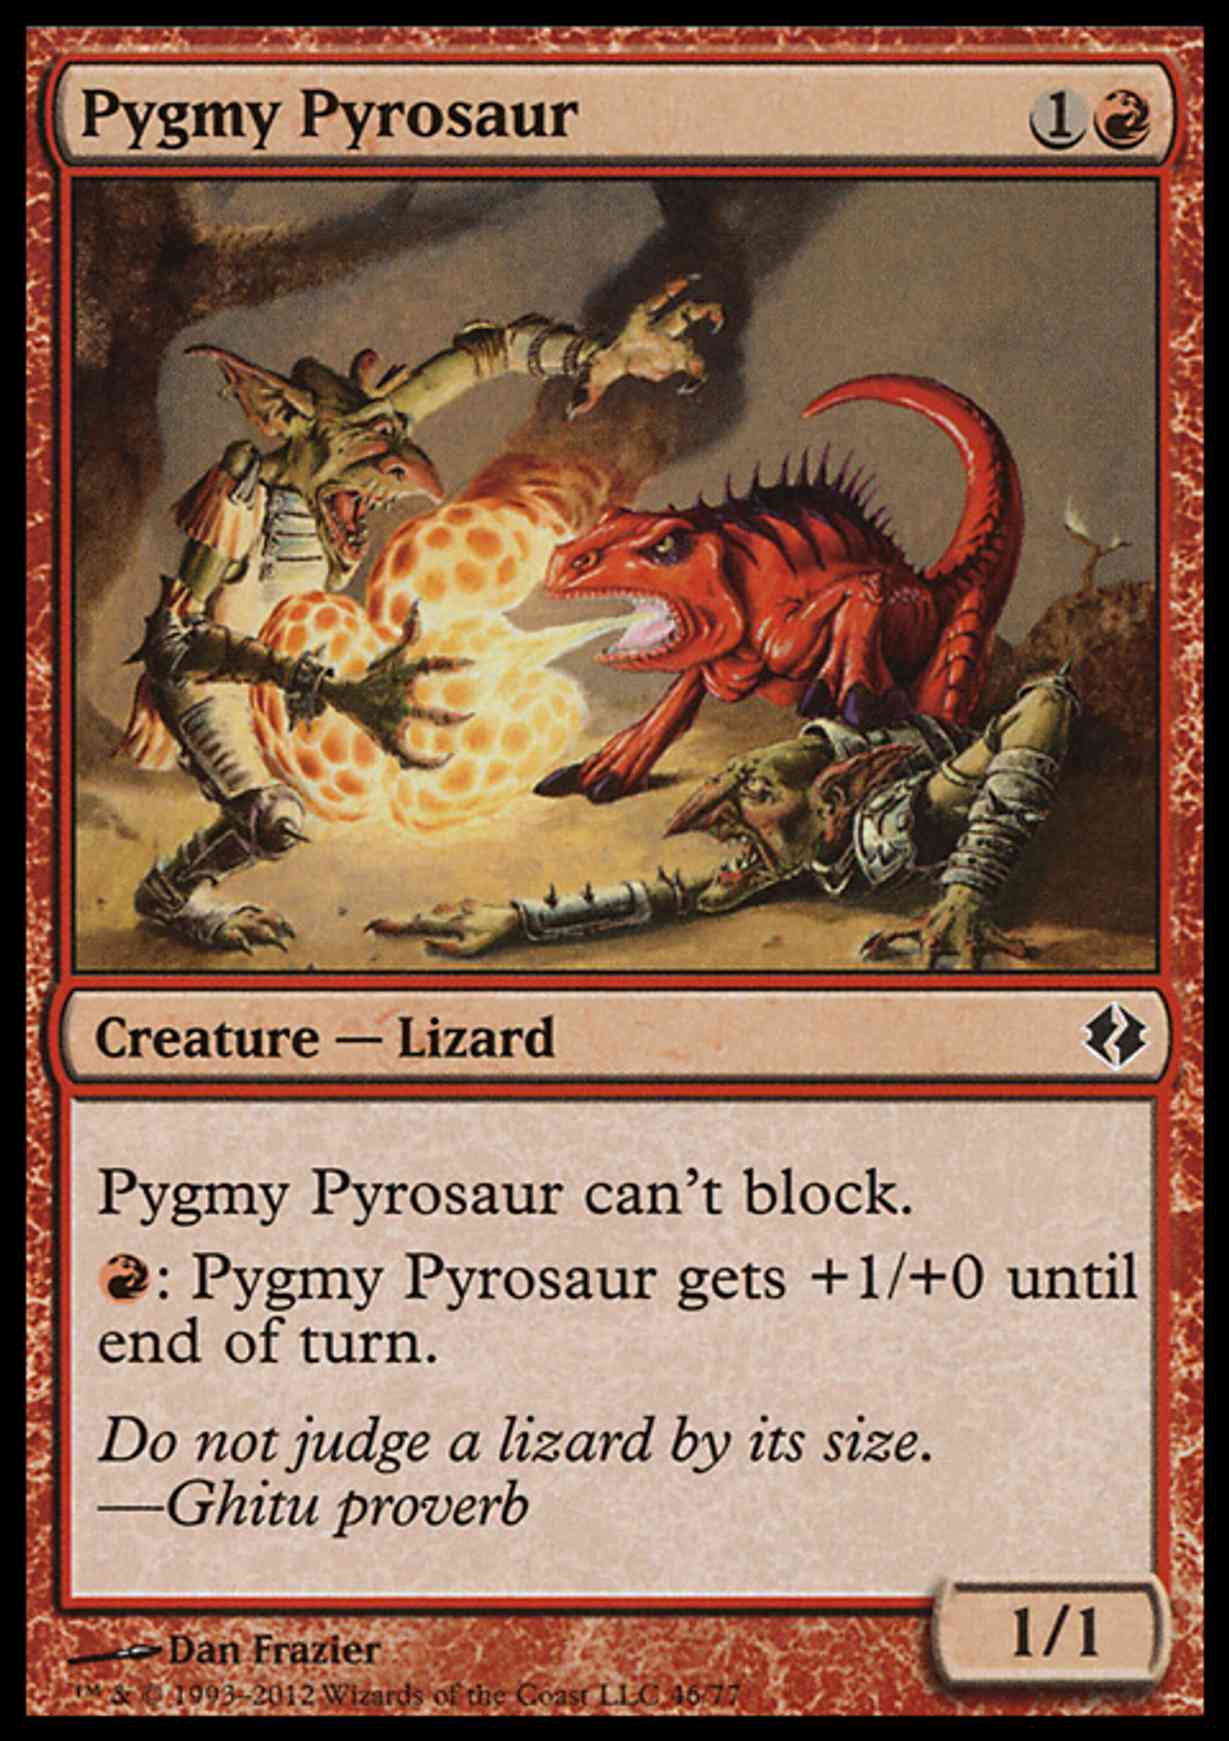 Pygmy Pyrosaur magic card front